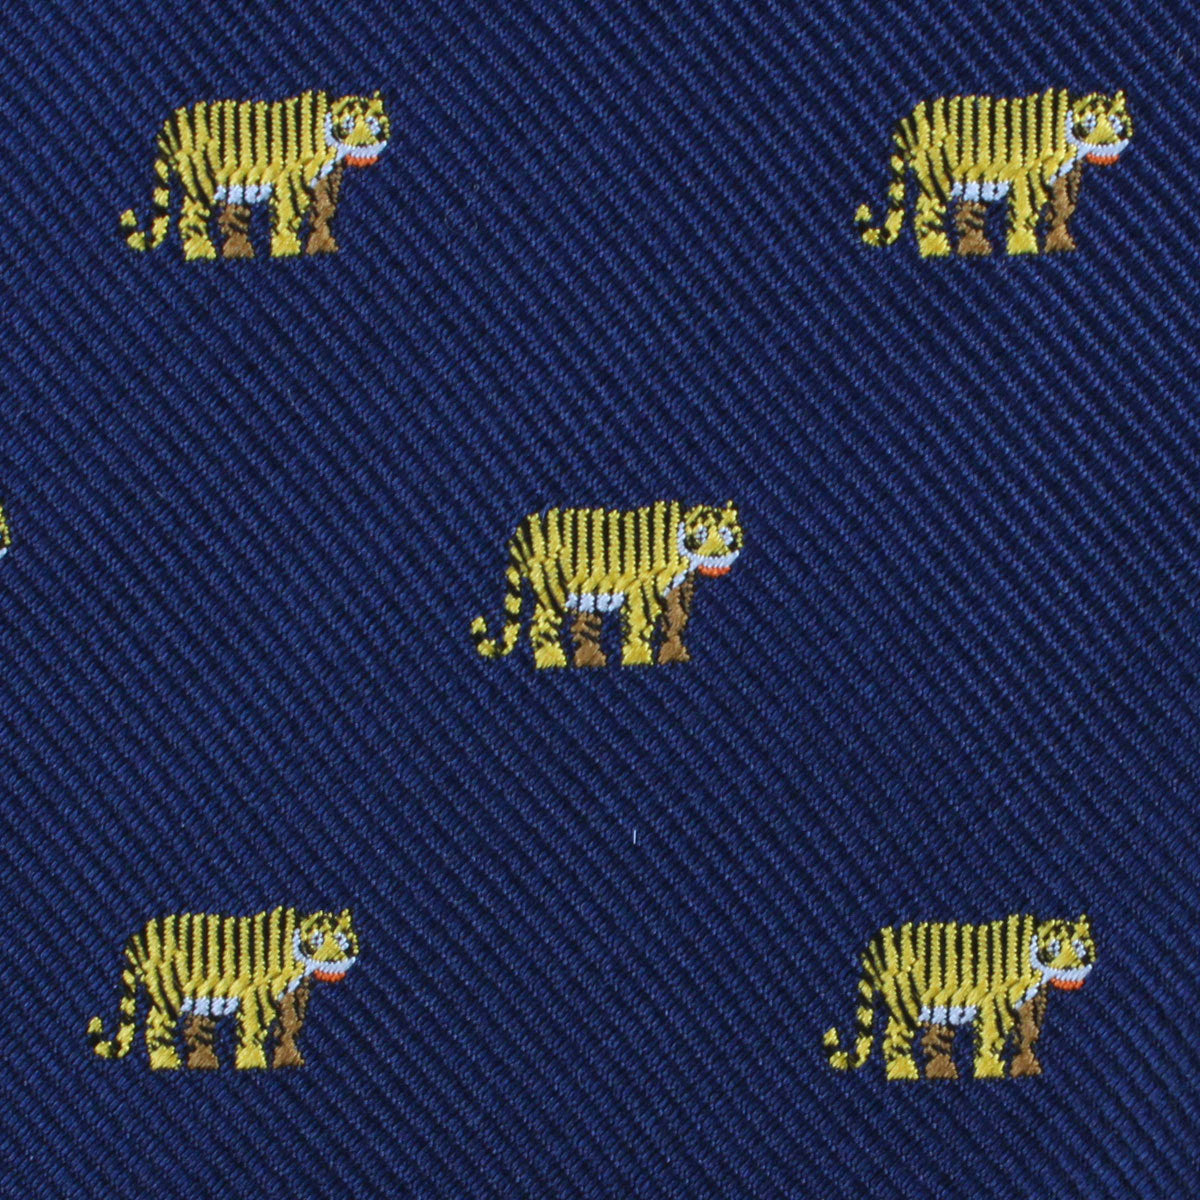 Siberian Tiger Fabric Pocket Square